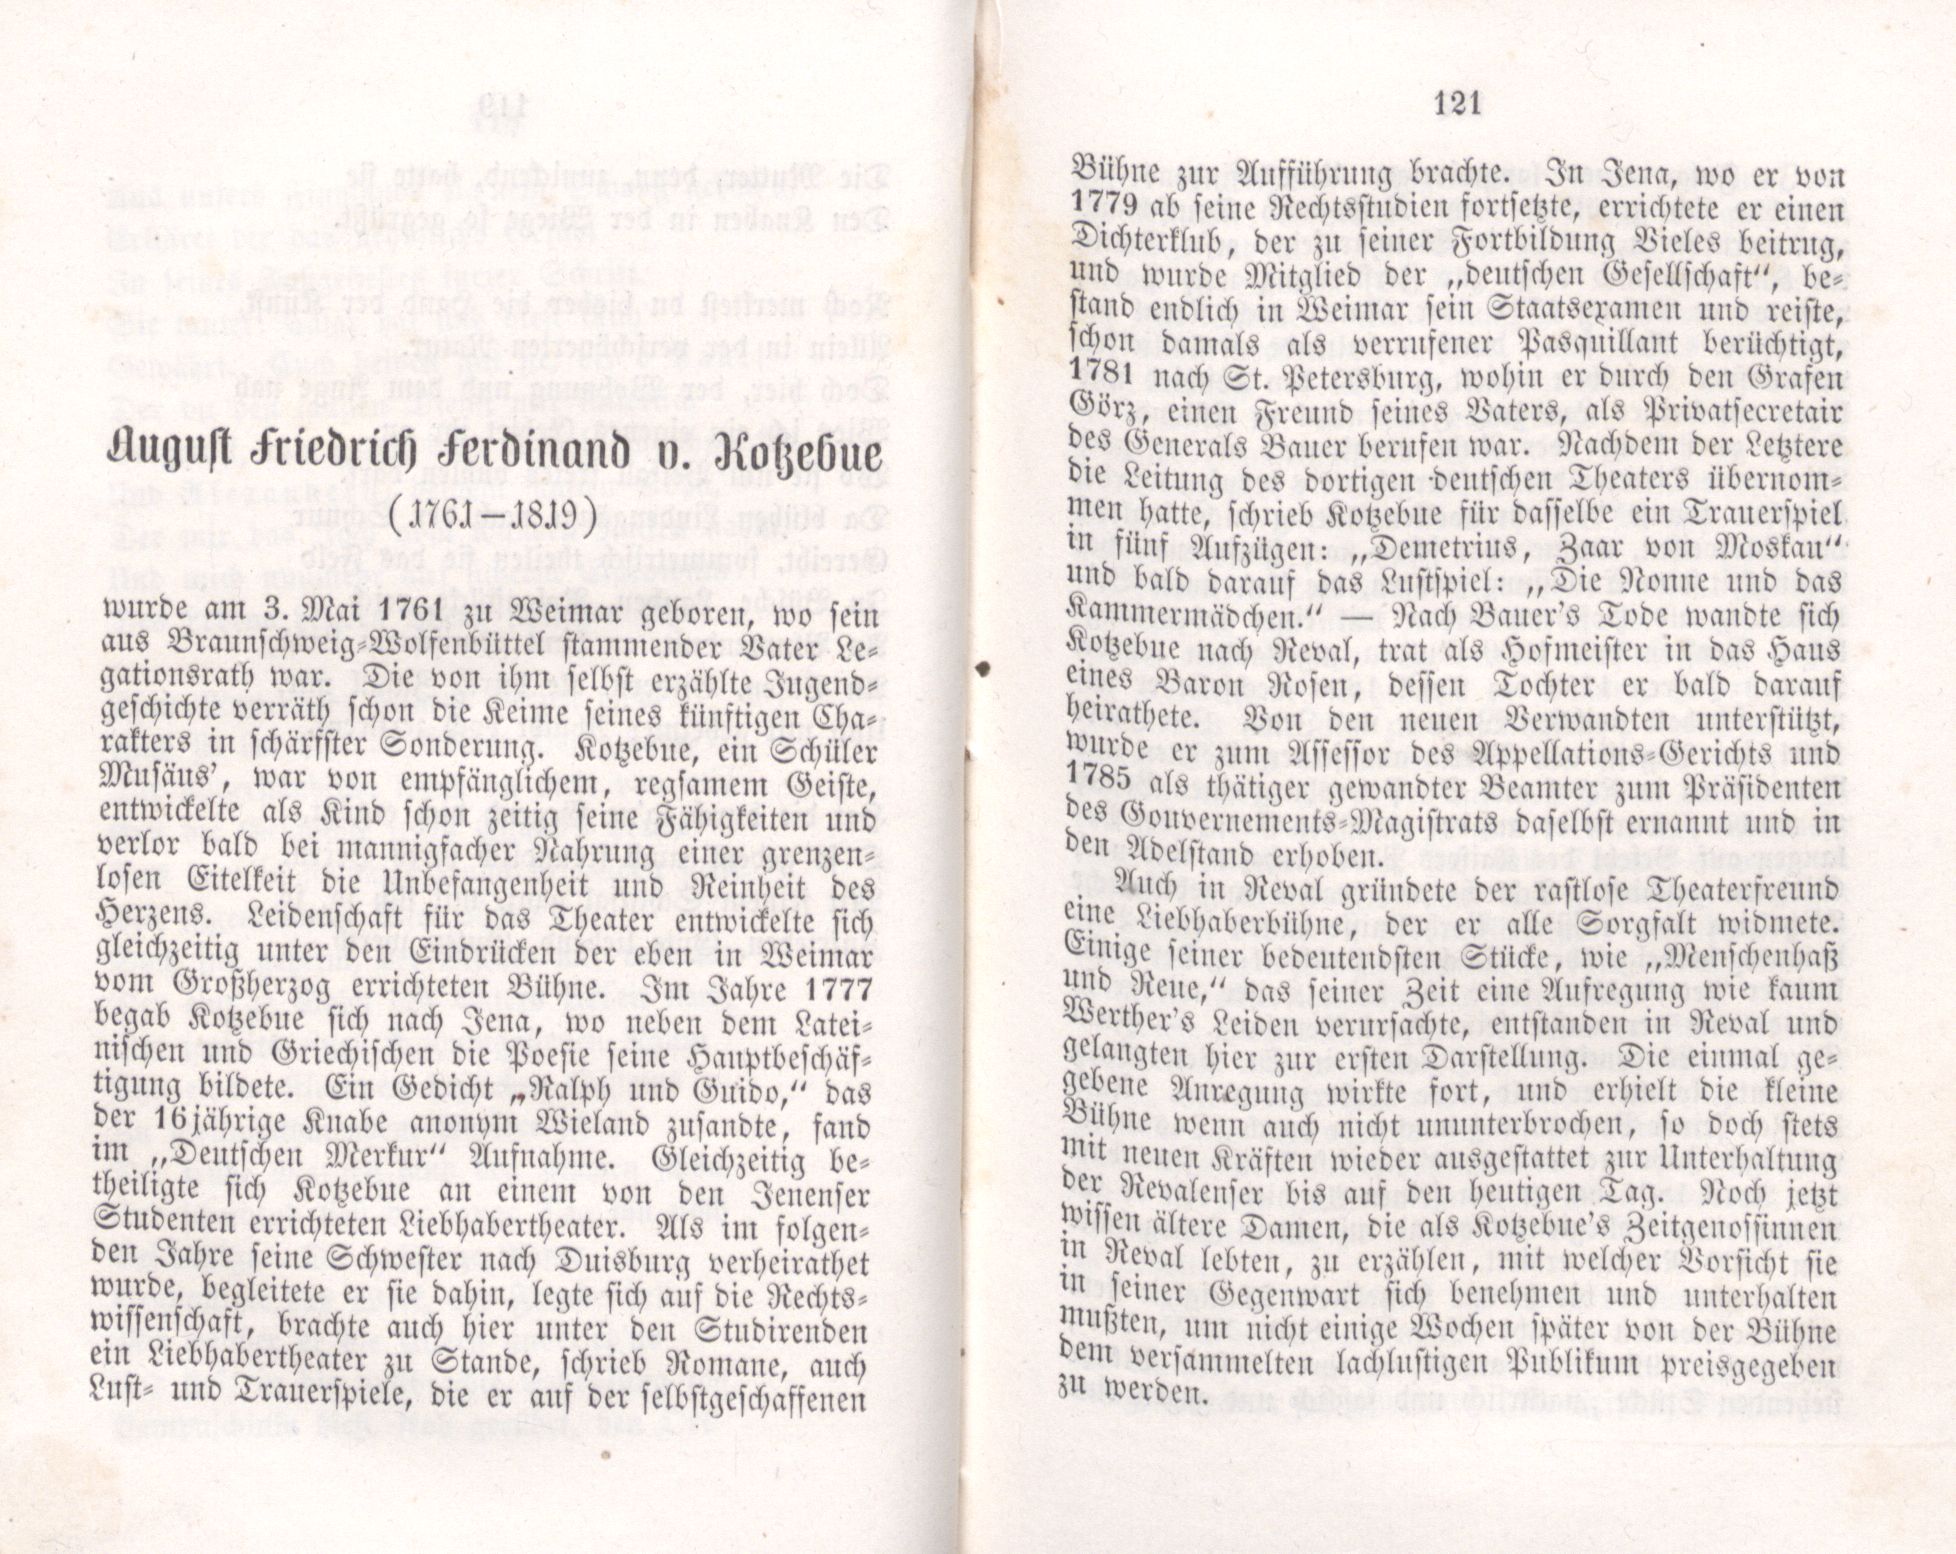 August Friedrich Ferdinand v. Kotzebue (1855) | 1. (120-121) Main body of text